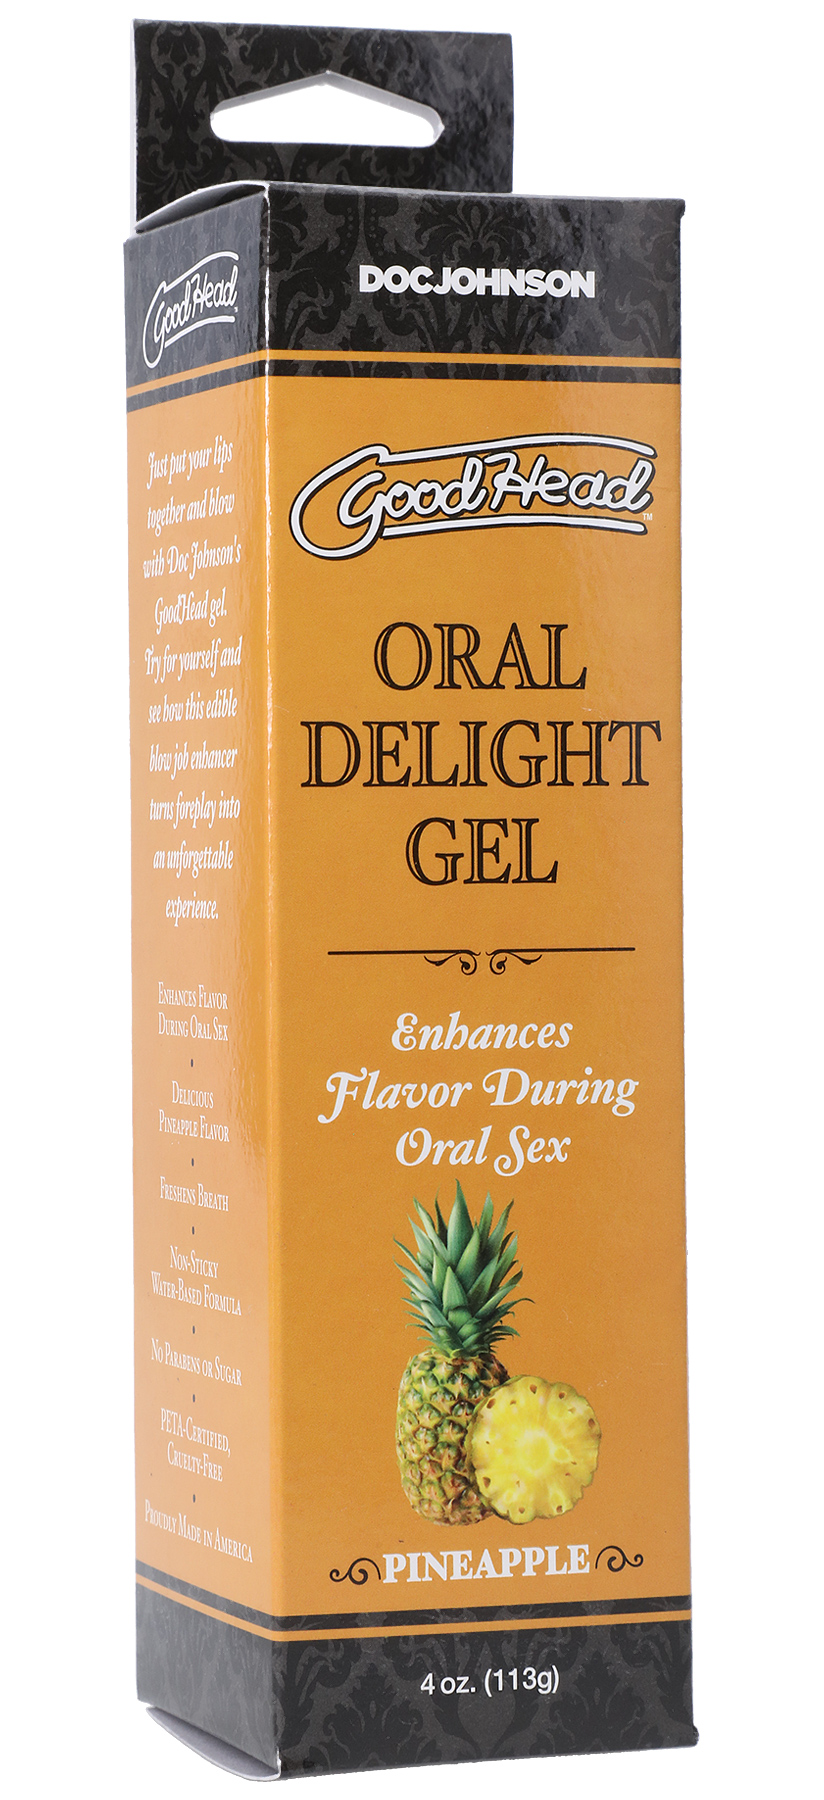 goodhead oral delight gel pineapple  oz. 